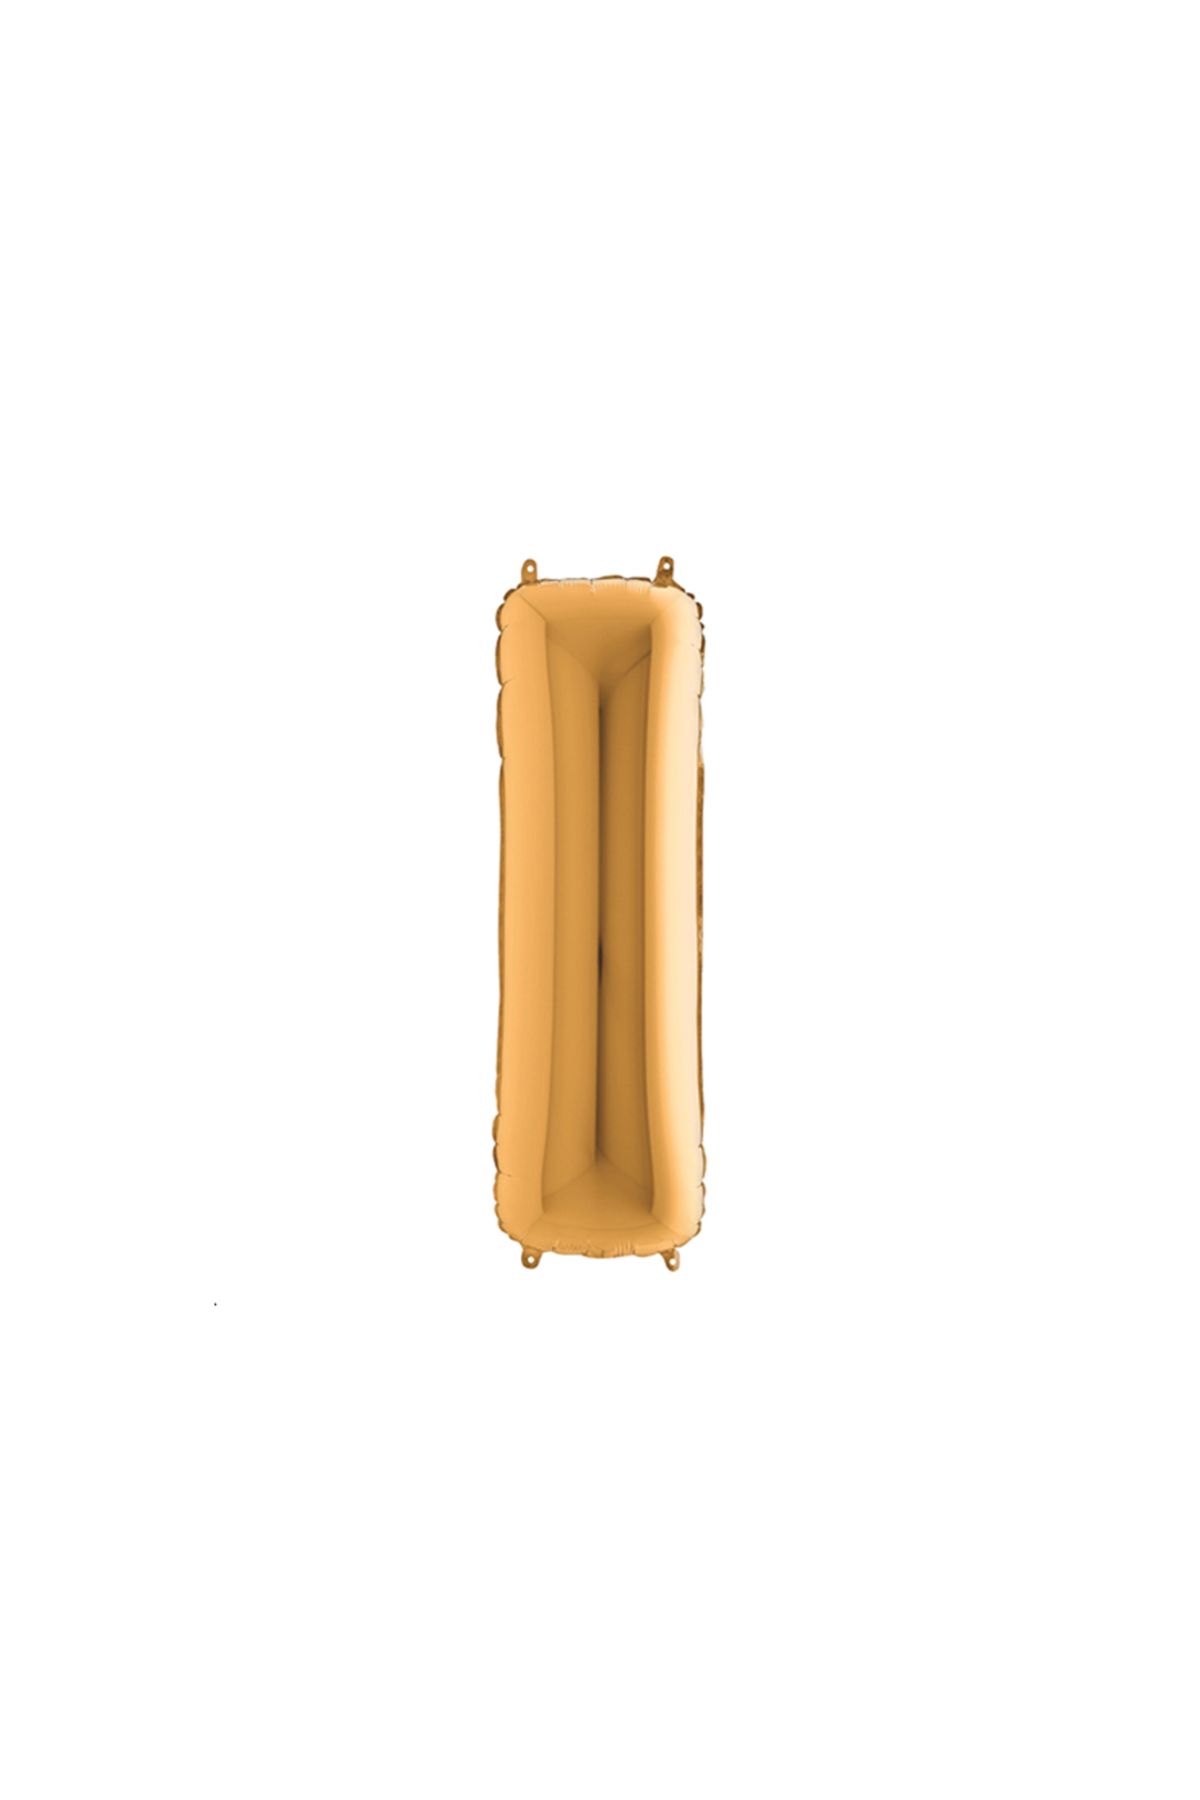 Bimotif Harfli folyo balon, altın renkli parlak, 102cm I Harfi 1 adet